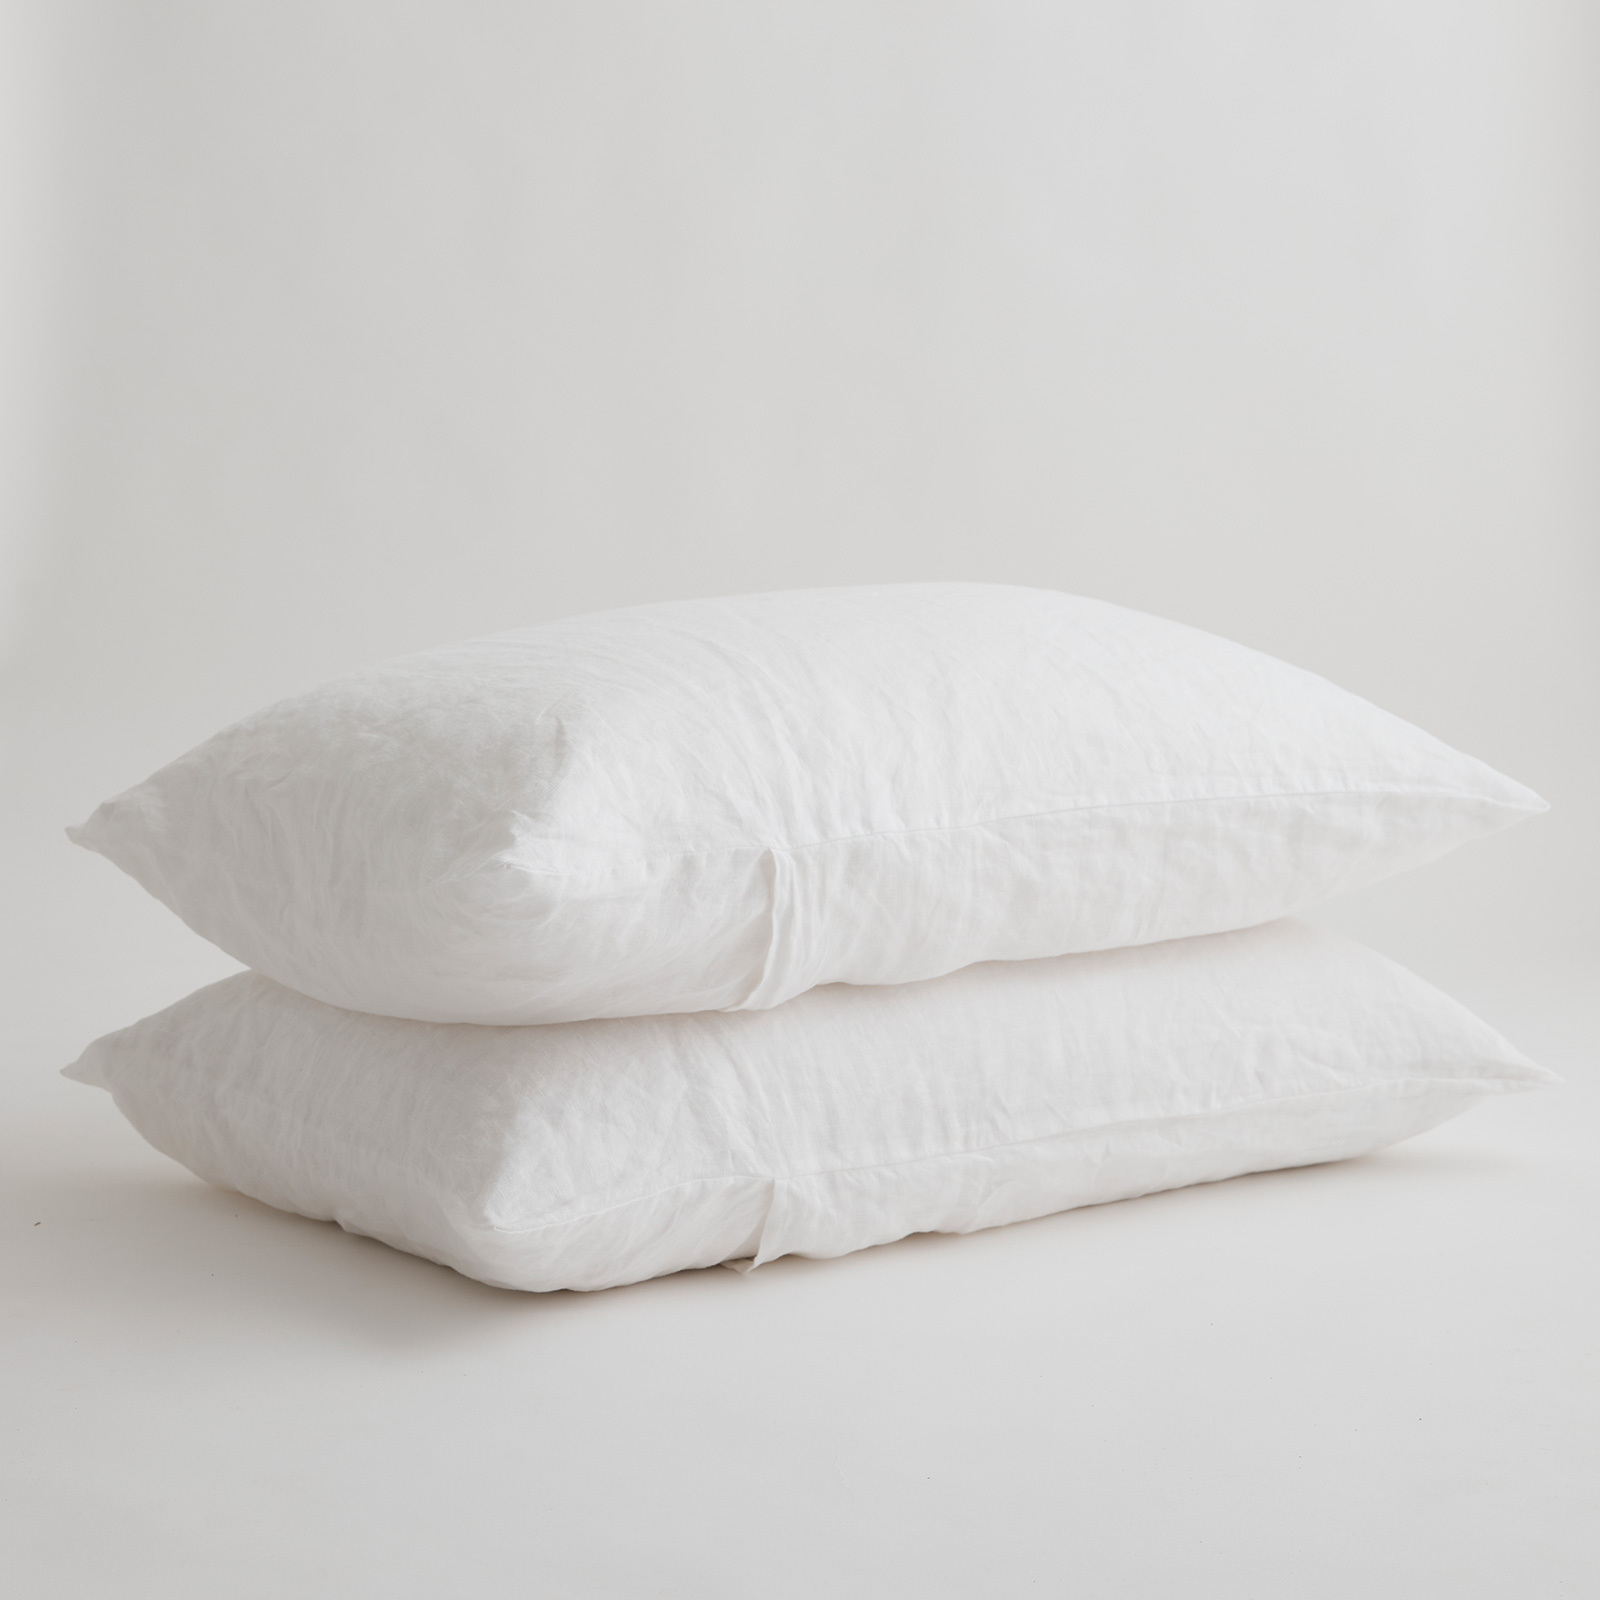 100% Pure Linen White Standard Pillowcase Set (2)